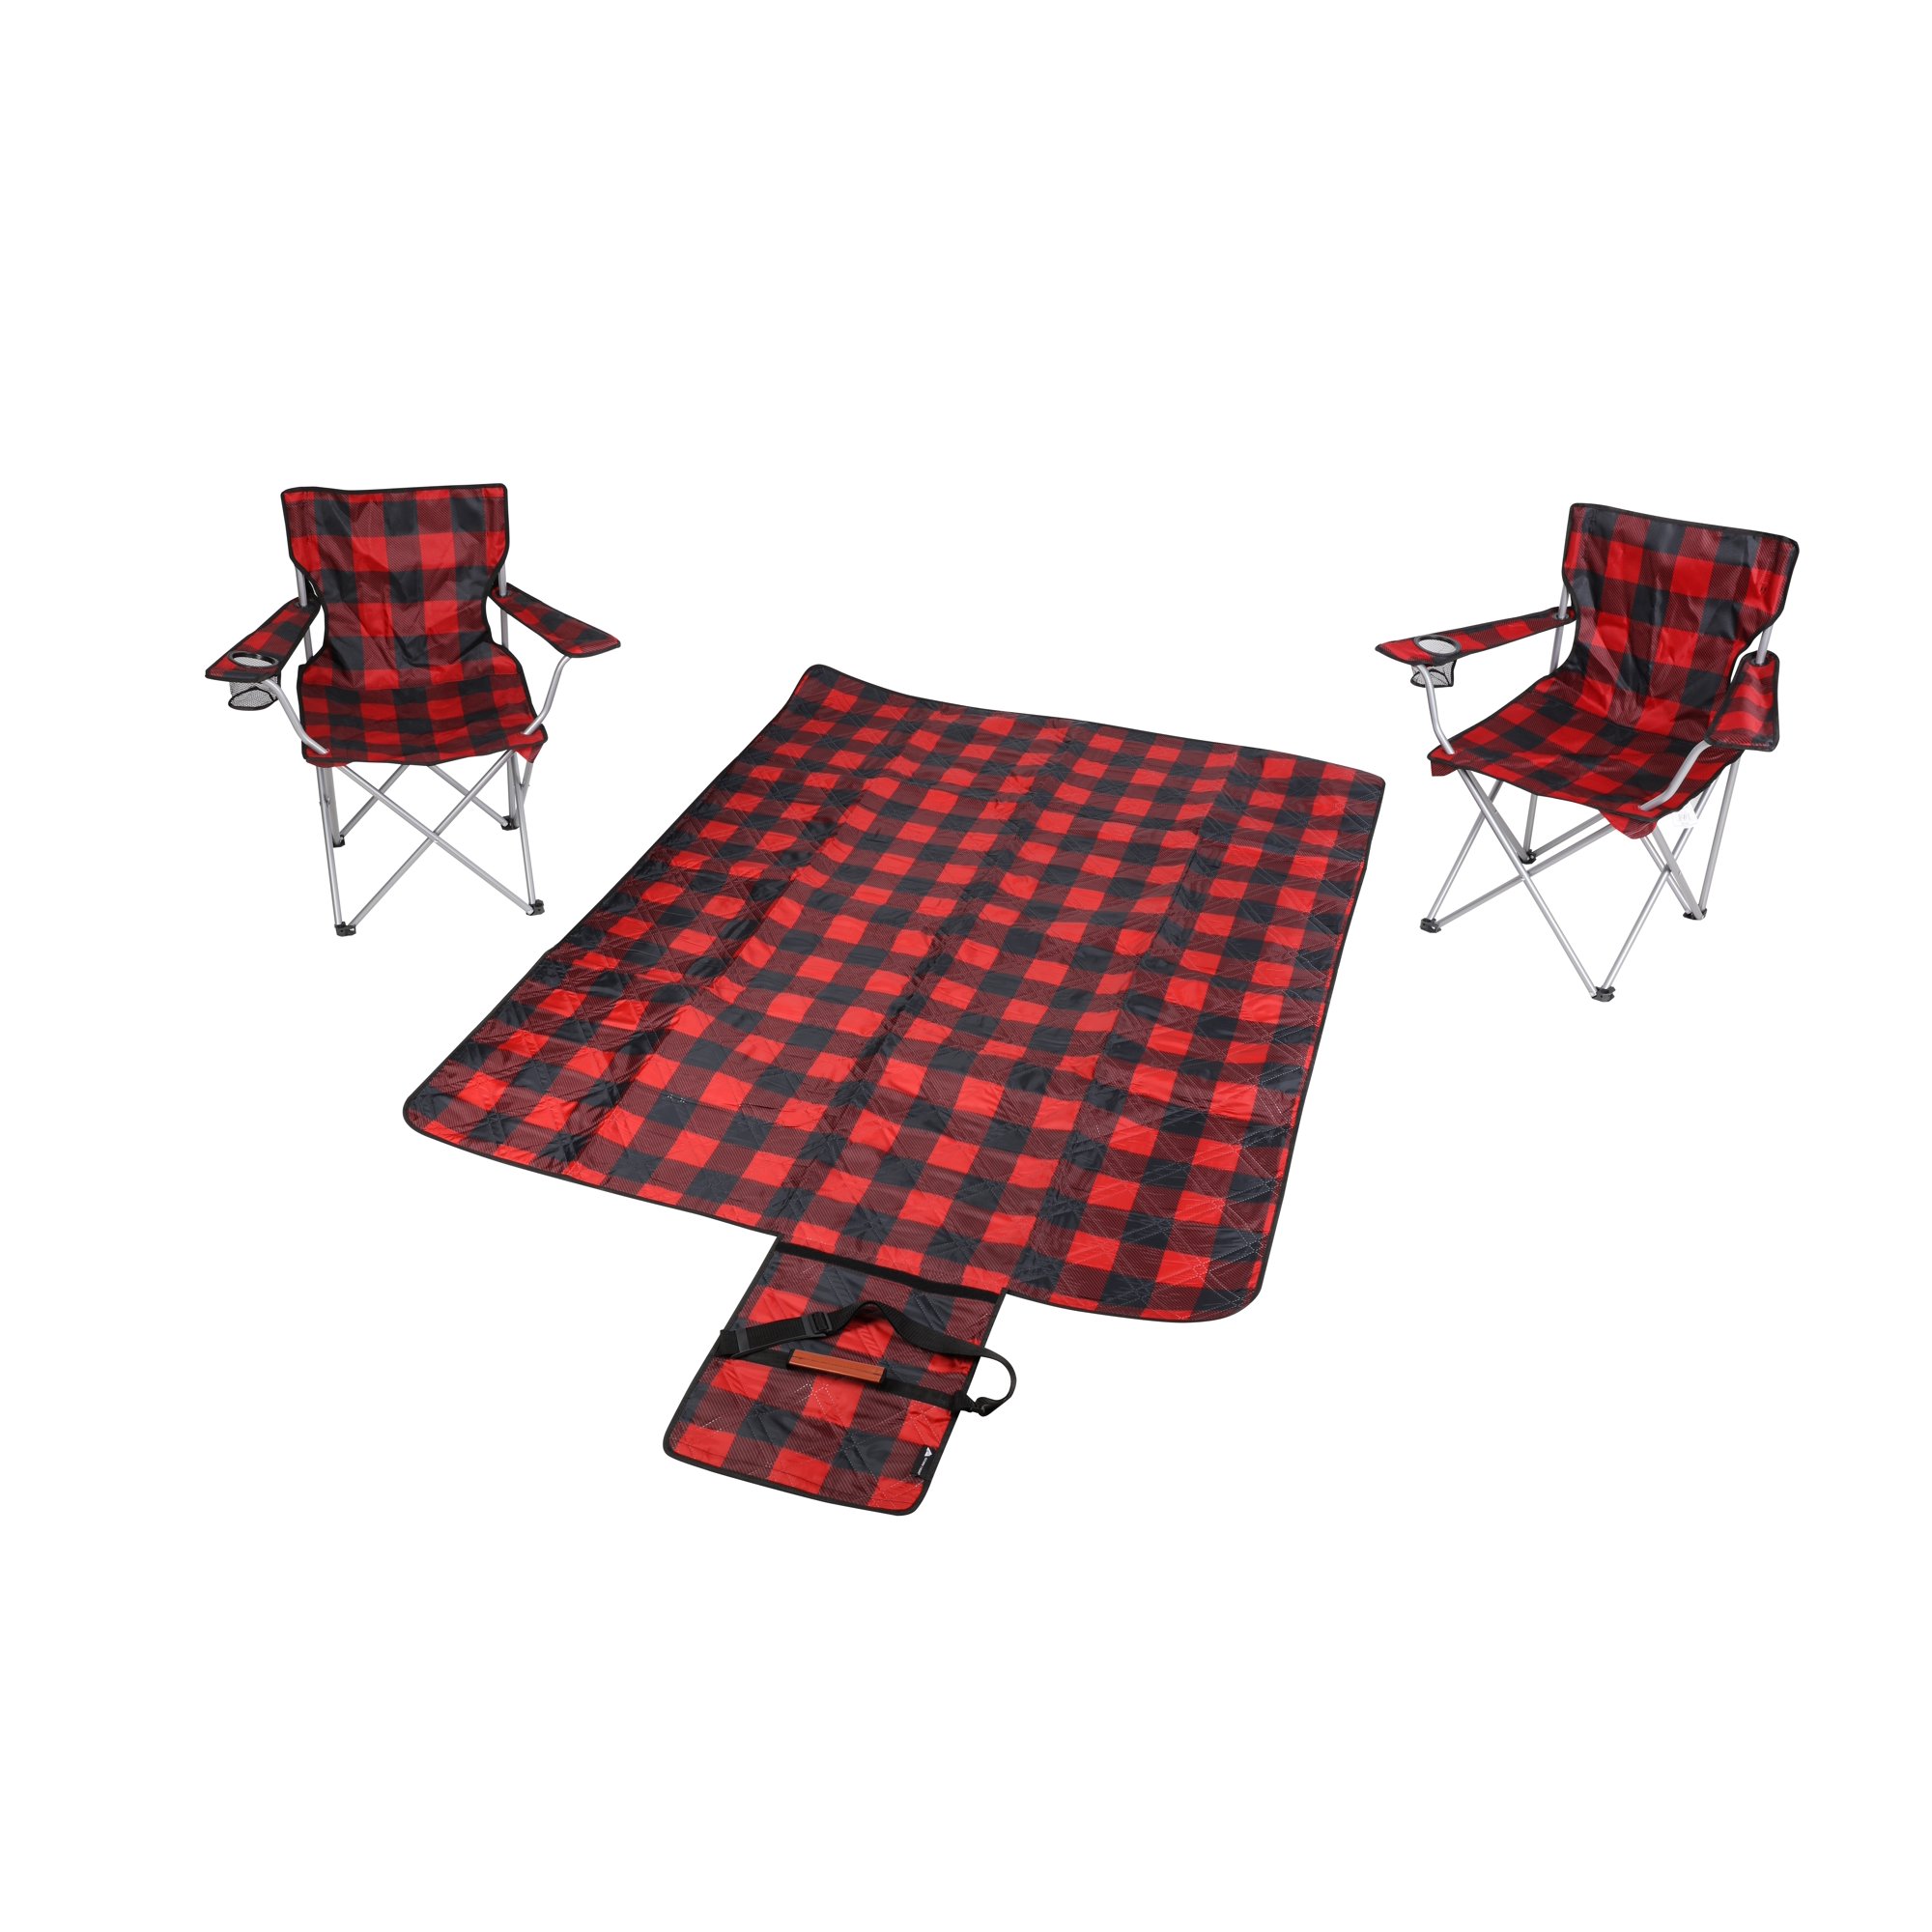 3-Pc Ozark Trail Camping Chairs & Blanket Set (2 Chairs + 1 Blanket, Red Buffalo Plaid) $20 ($6.67 each) + FS w/ Walmart+ or FS on $35+